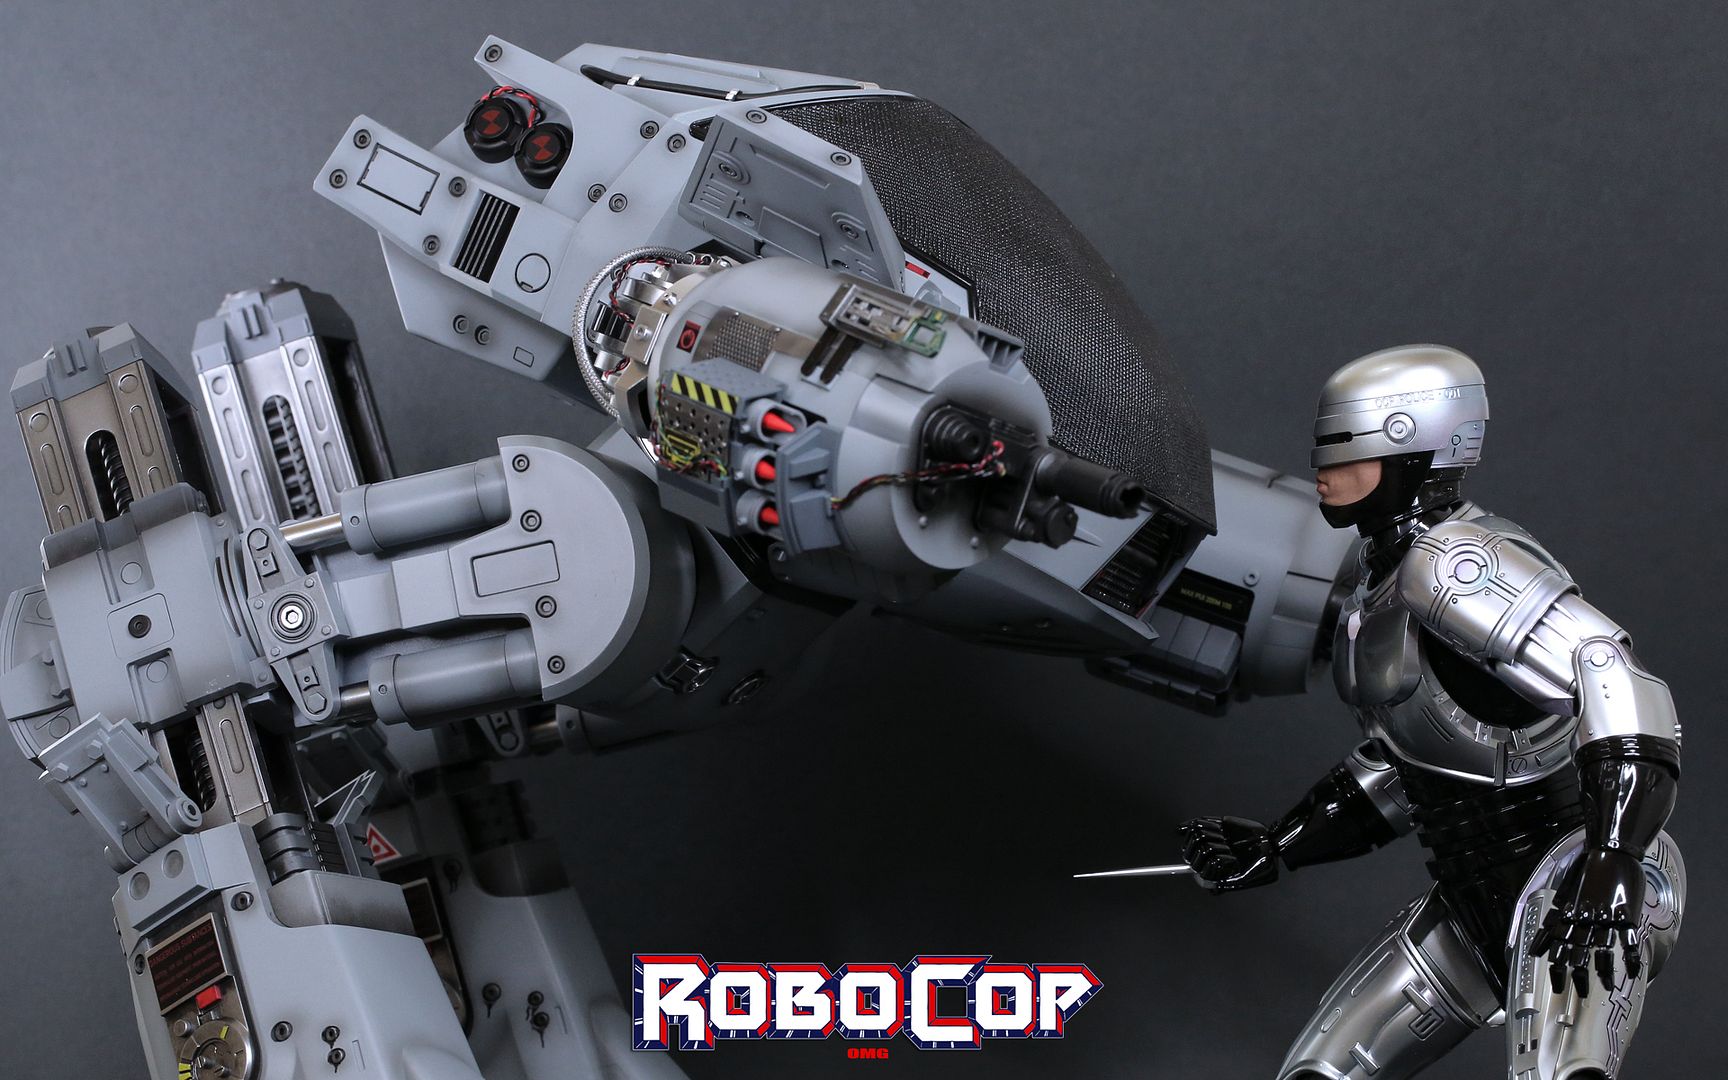 RobocopHD302_zps7ba2389f.jpg